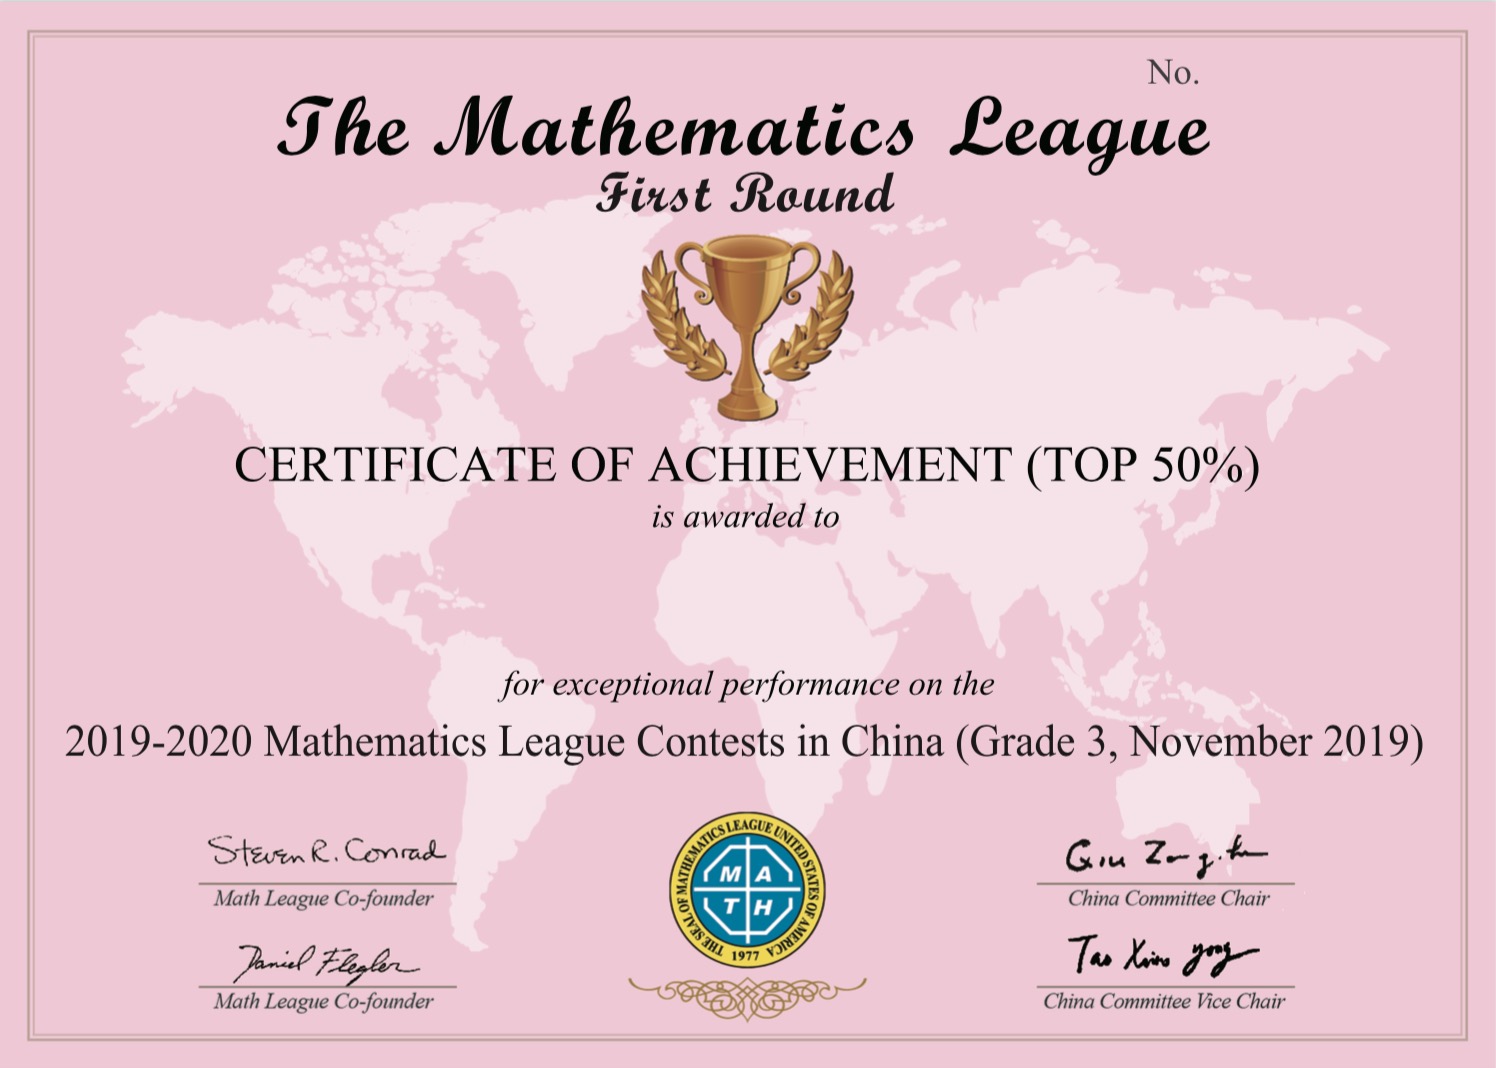 Certificate of Achievement Top 50% 证书